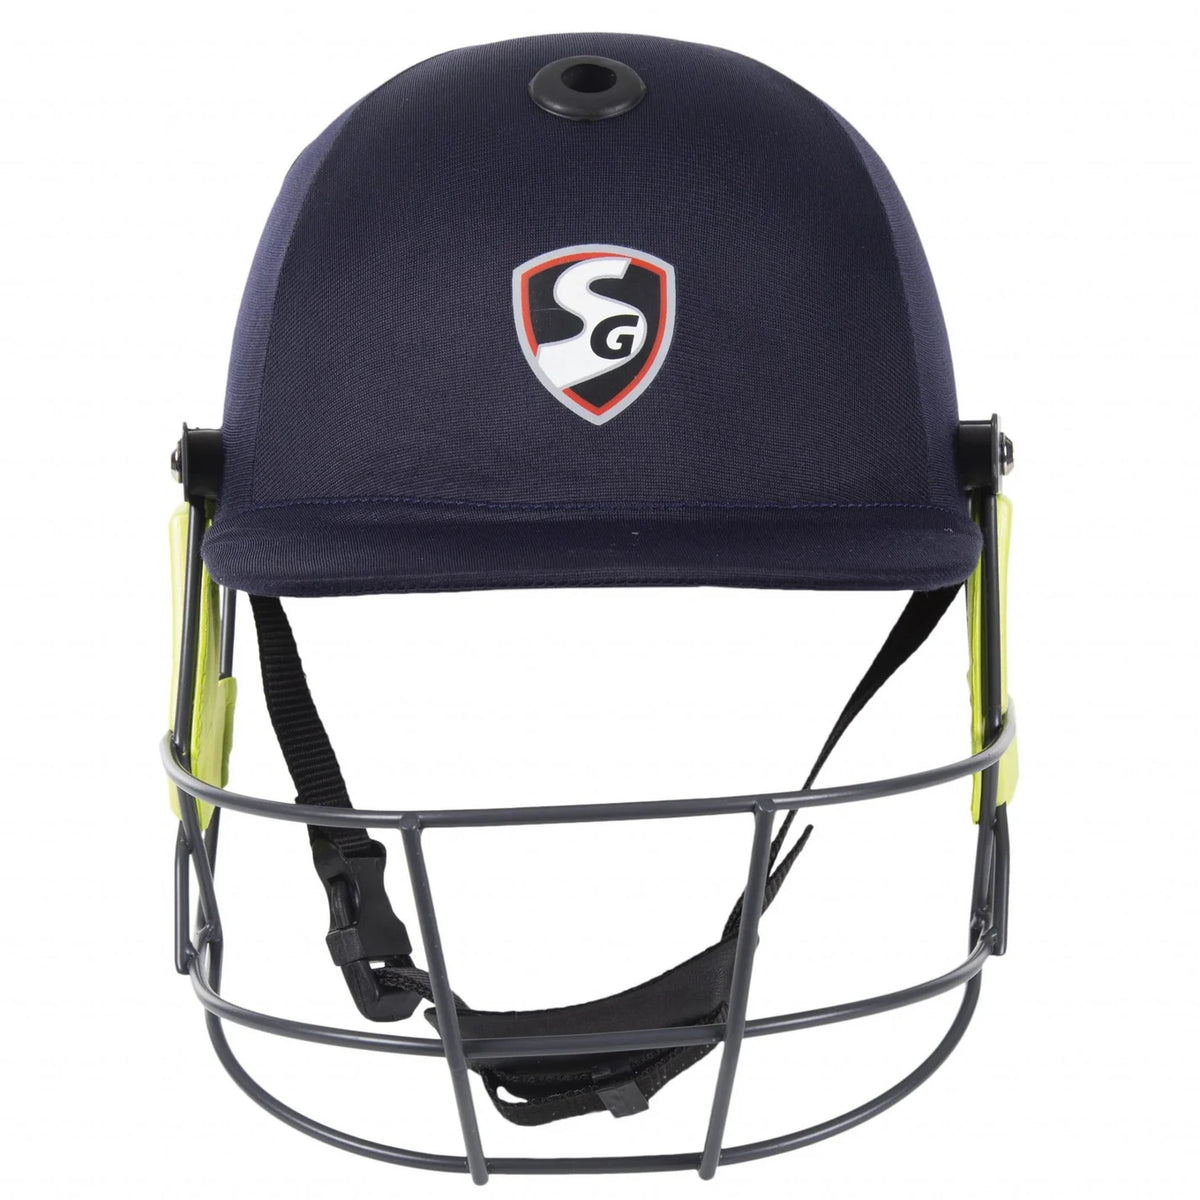 Pre-Order SG Aeroselect Cricket Helmet